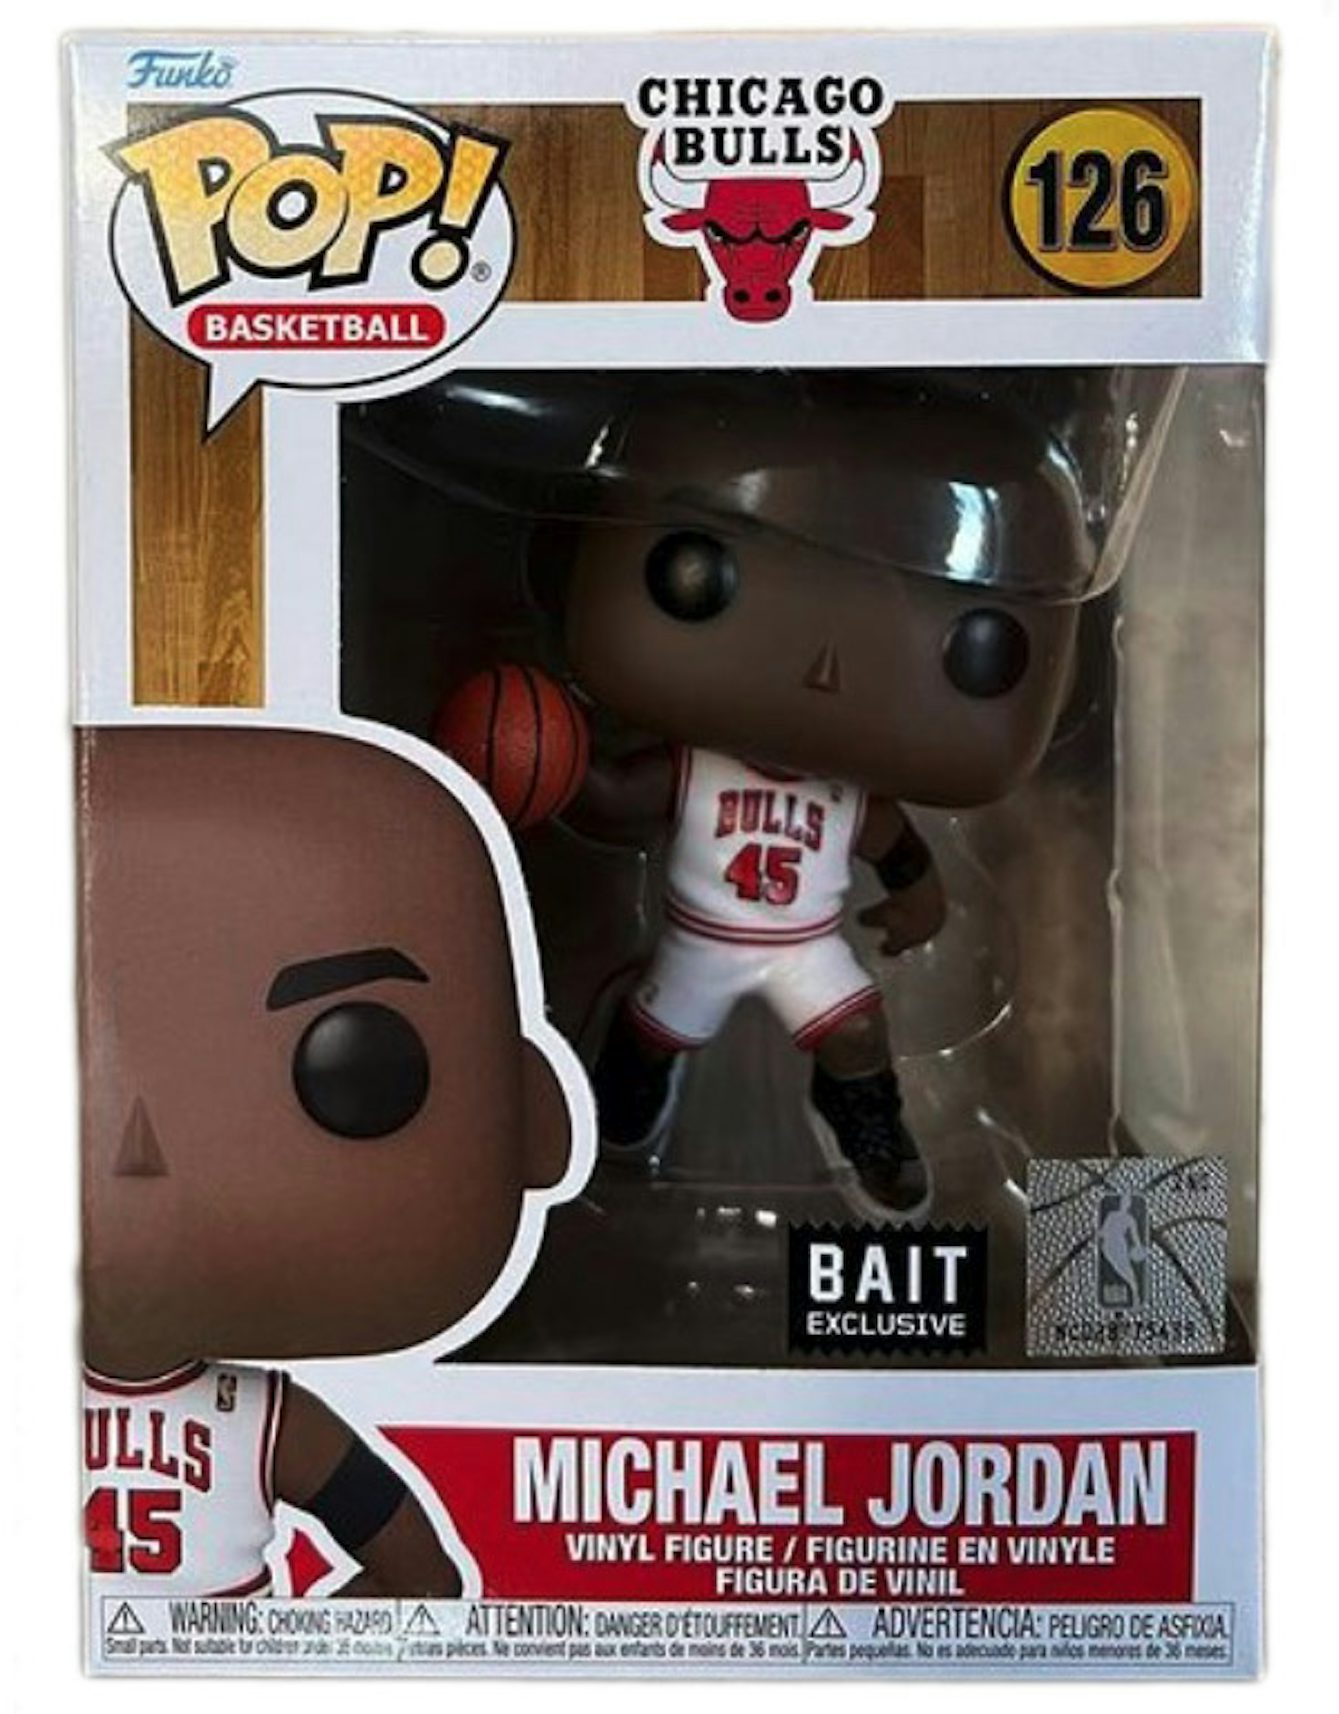 Michael Jordan Red Jersey Airpods Case